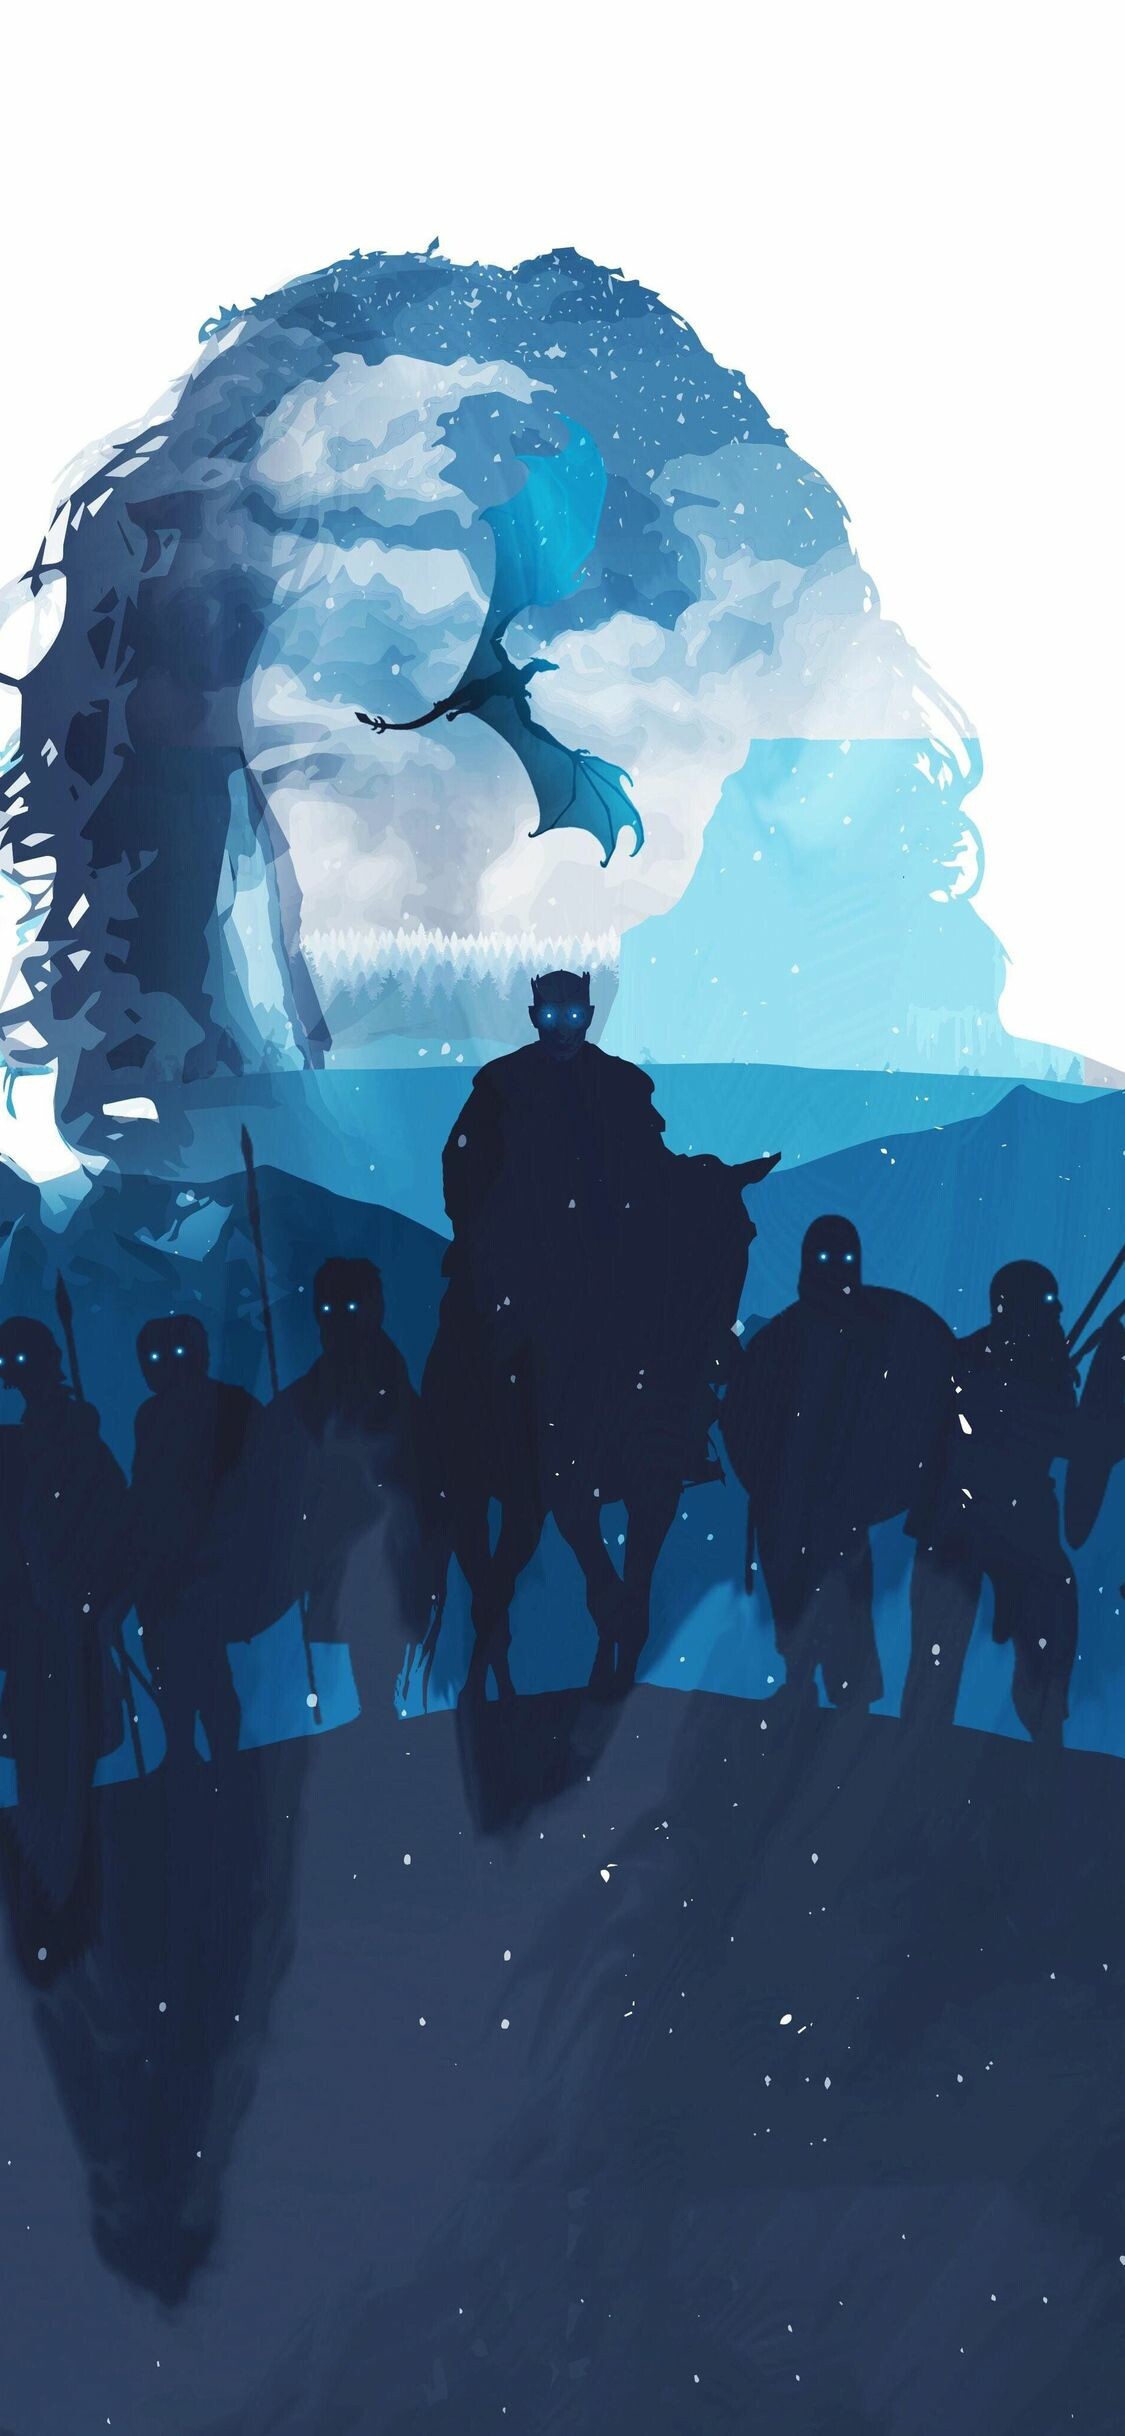 Game of Thrones: Night King, White Walkers, Jon Snow. 1130x2440 HD Wallpaper.